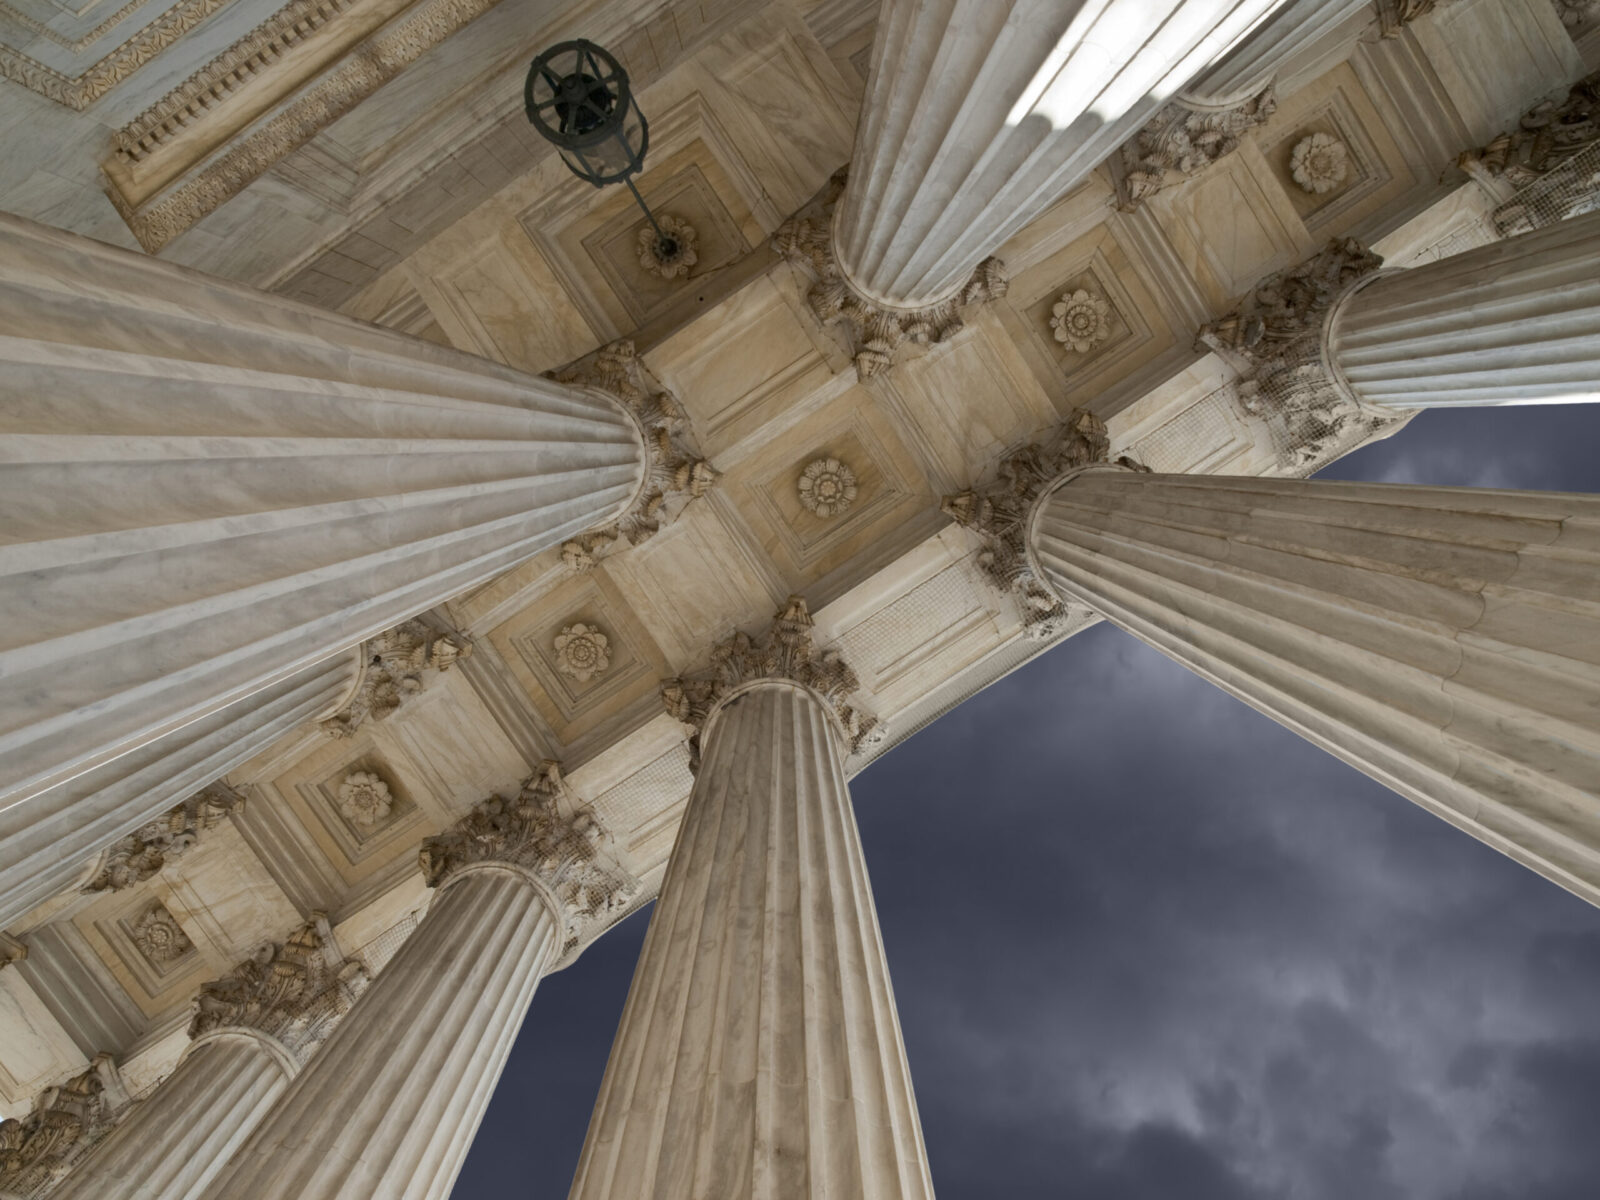 US Supreme Court Columns and Storm